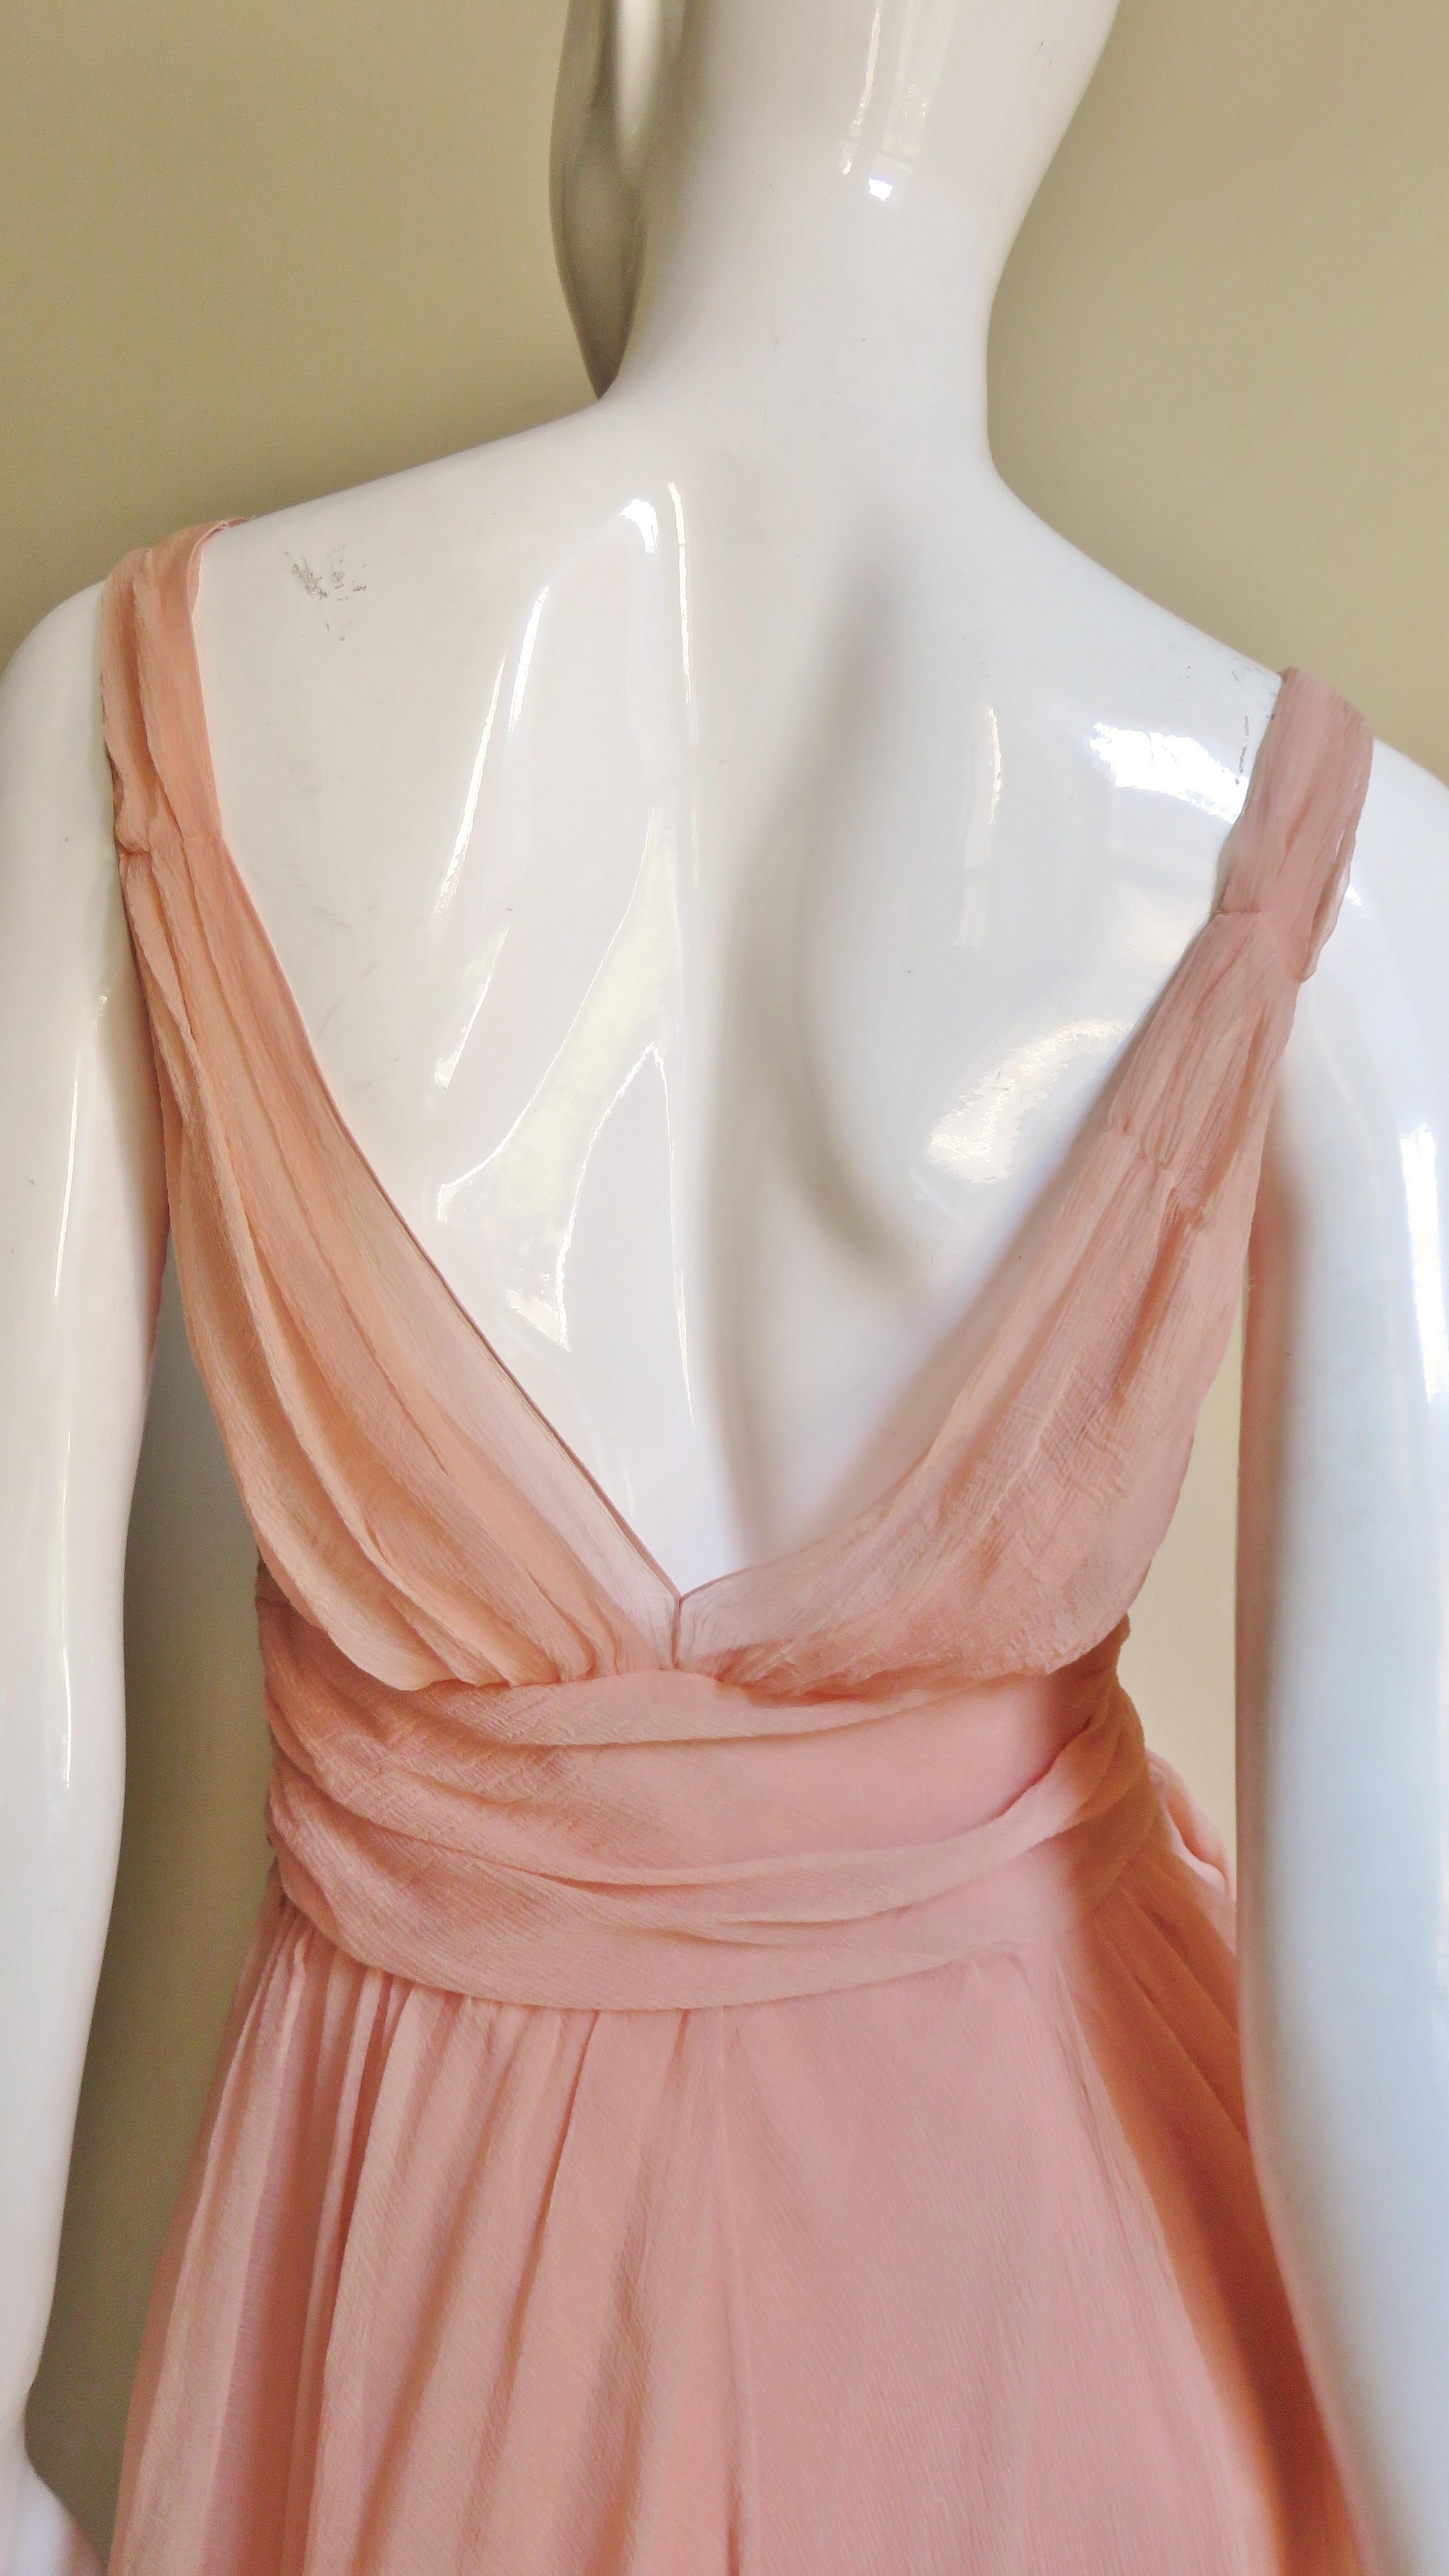  John Galliano for Christian Dior Silk Dress 7